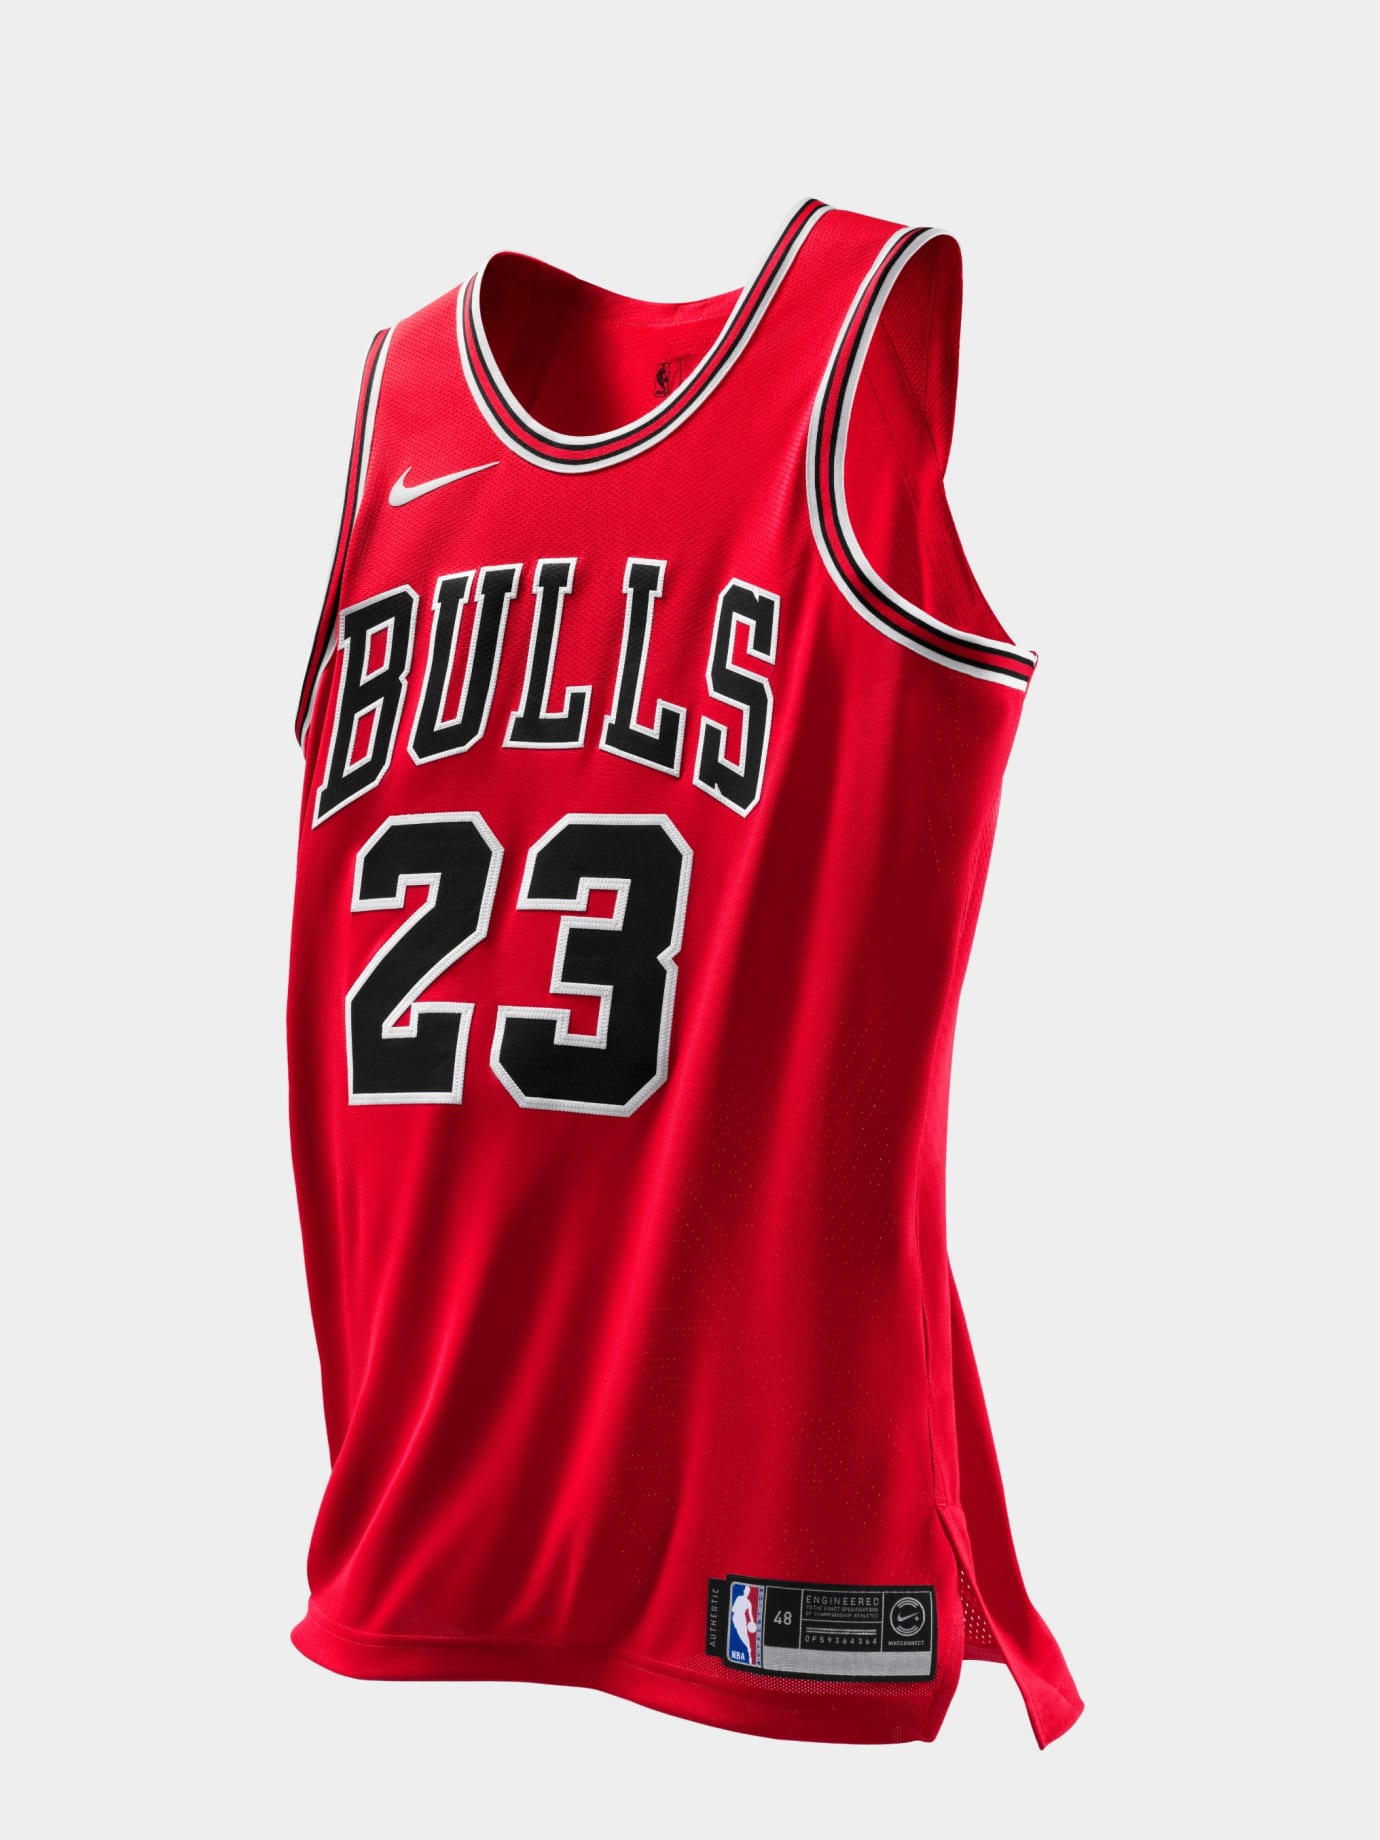 the bulls jersey